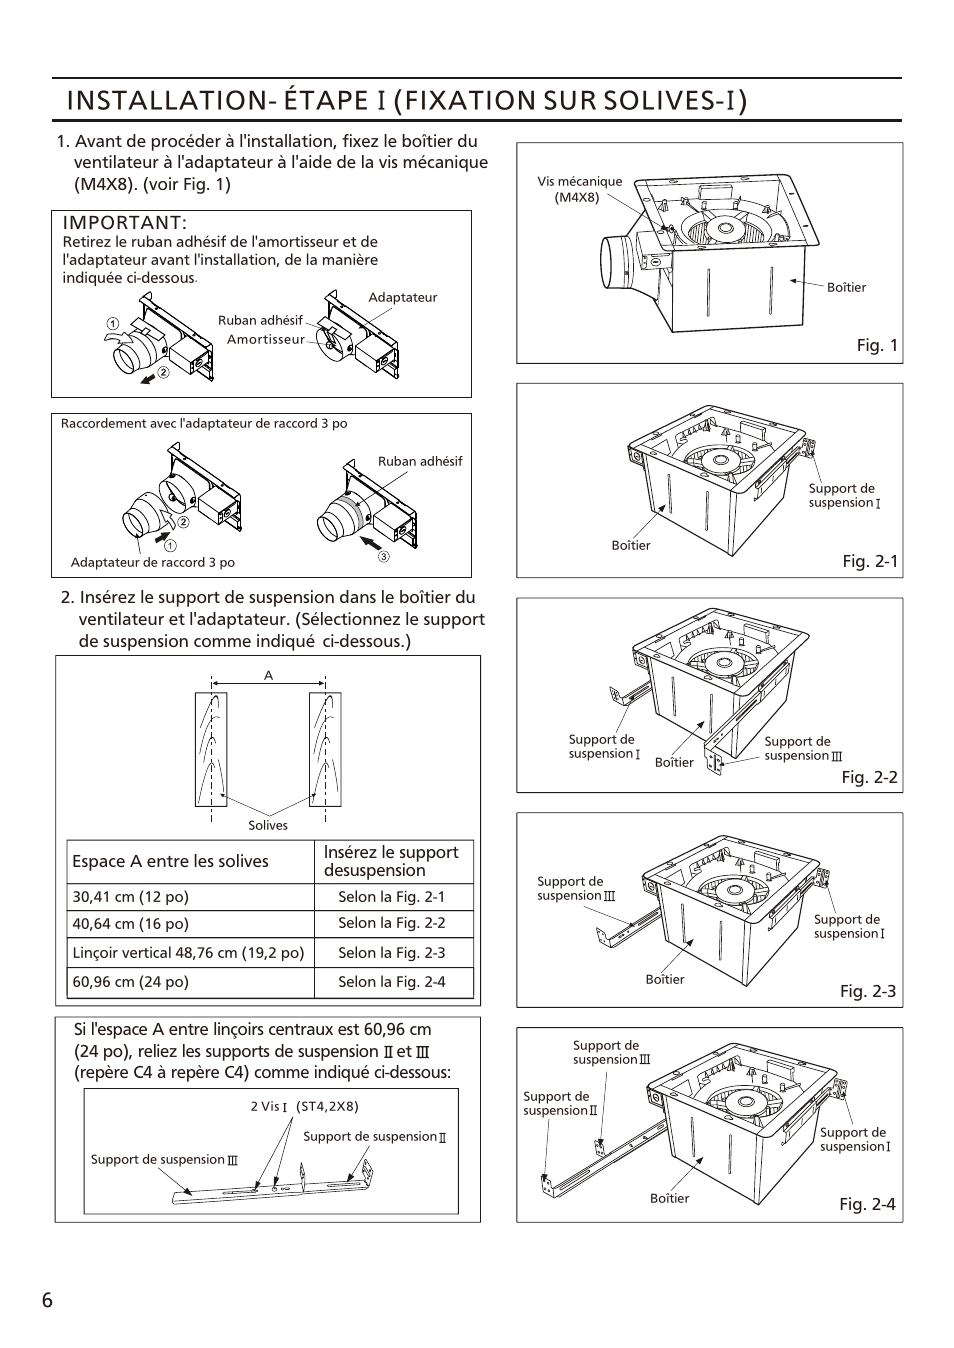 Installation- étape, Fixation sur solives- ) | Panasonic FV-08VFL3 Manuel d'utilisation | Page 6 / 16